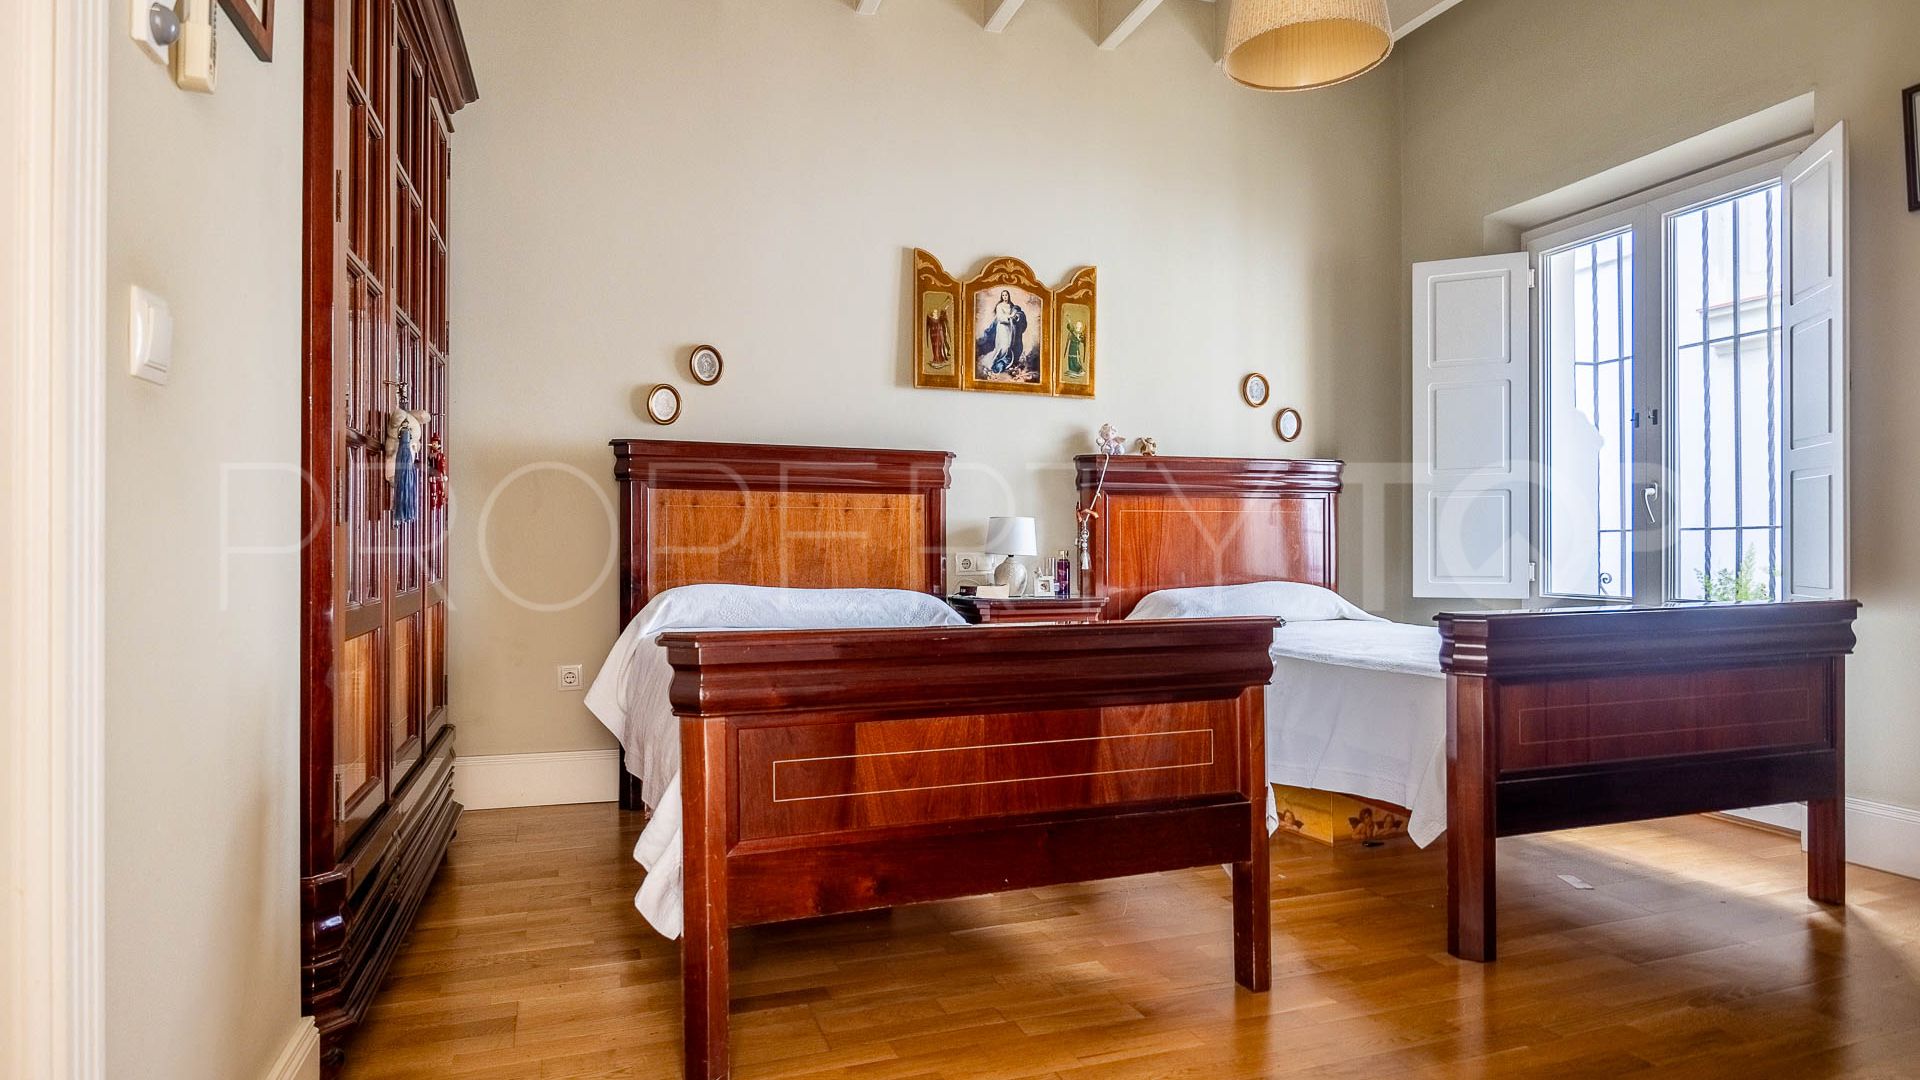 Comprar casa en Sevilla de 6 dormitorios